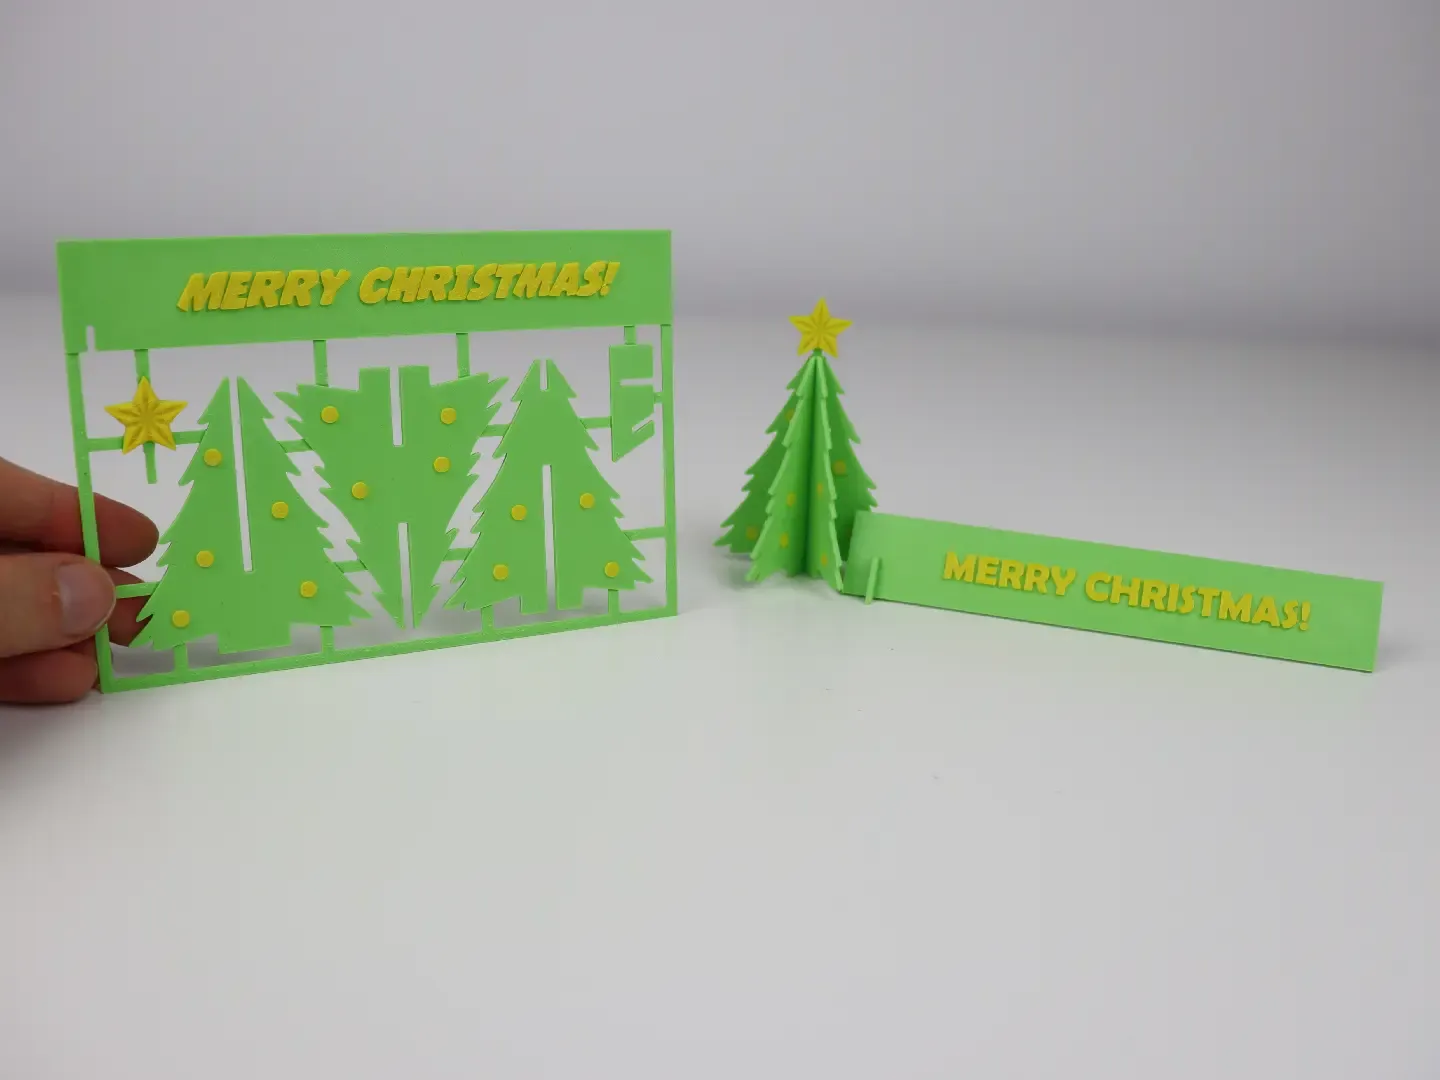 CHRISTMAS TREE CARD KIT